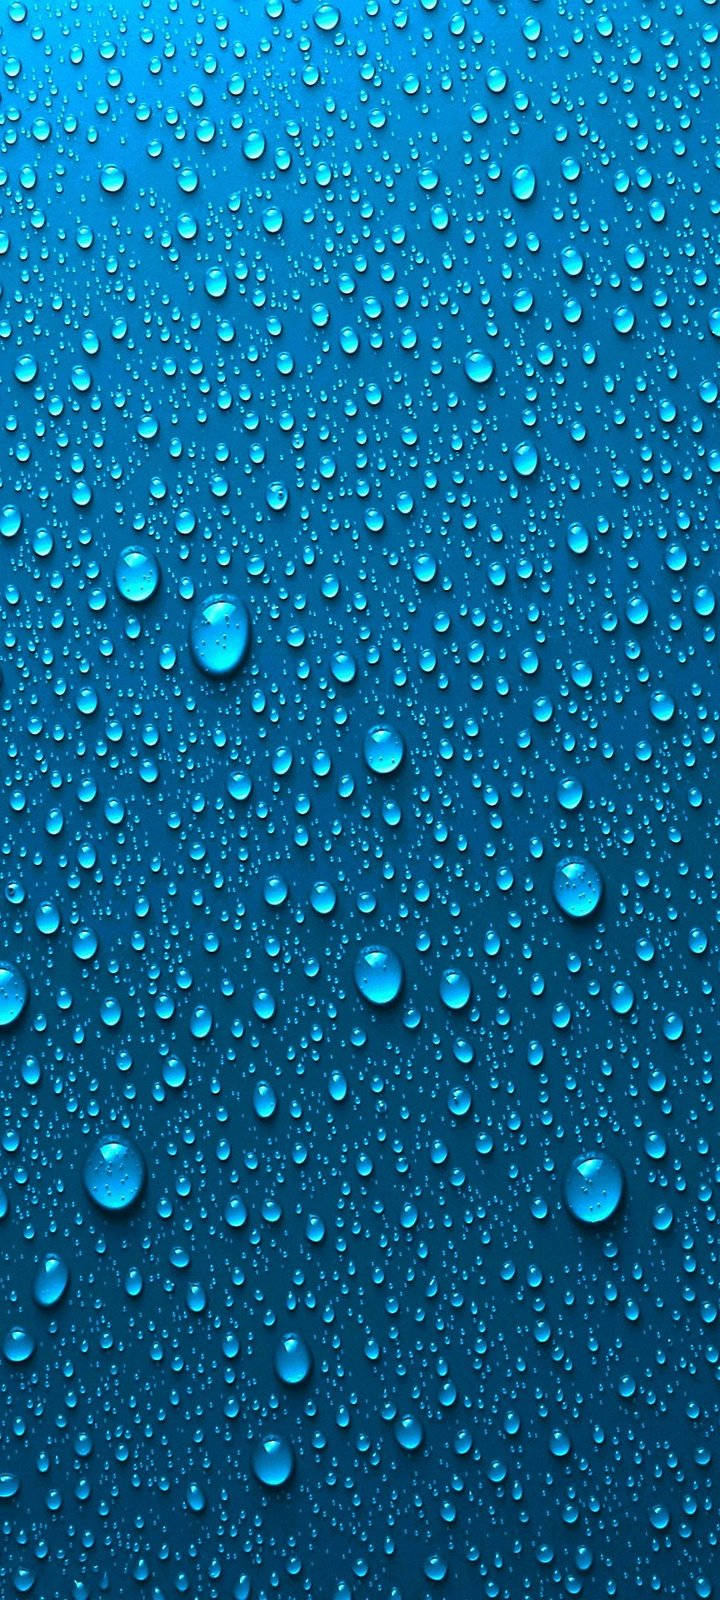 Vivo Y20 Blue Water Droplets Wallpaper